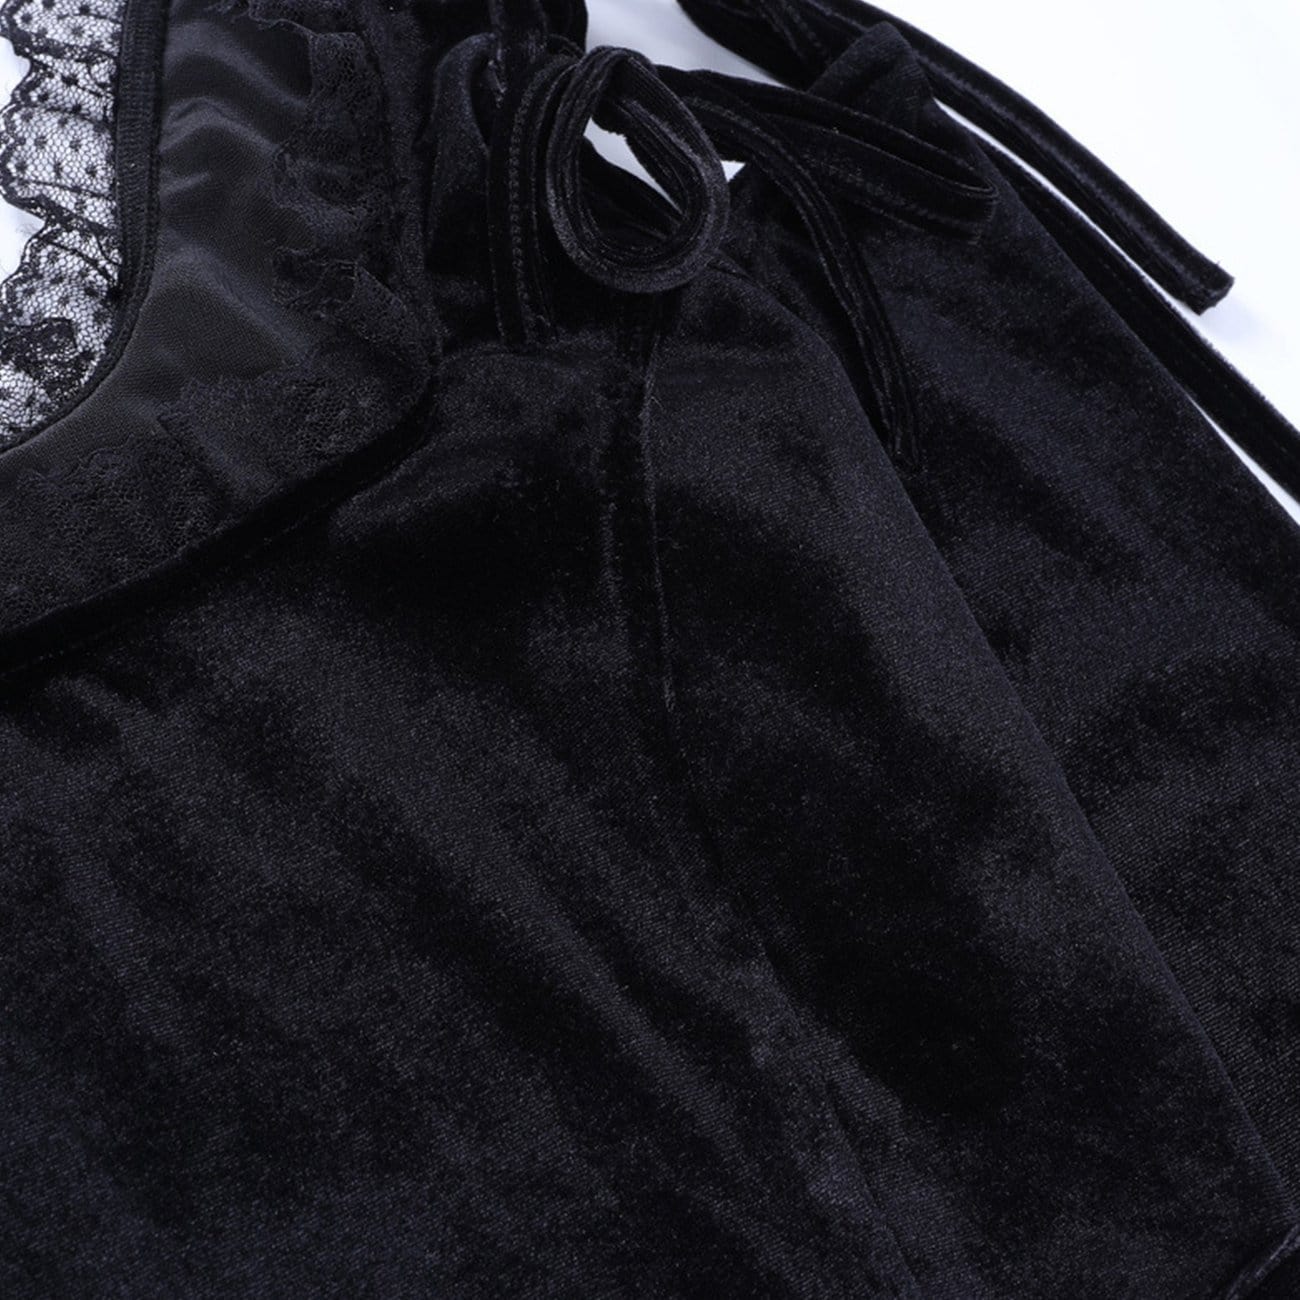 Dark Design Lace Vest Flared Sleeve Long Sleeve T-Shirt